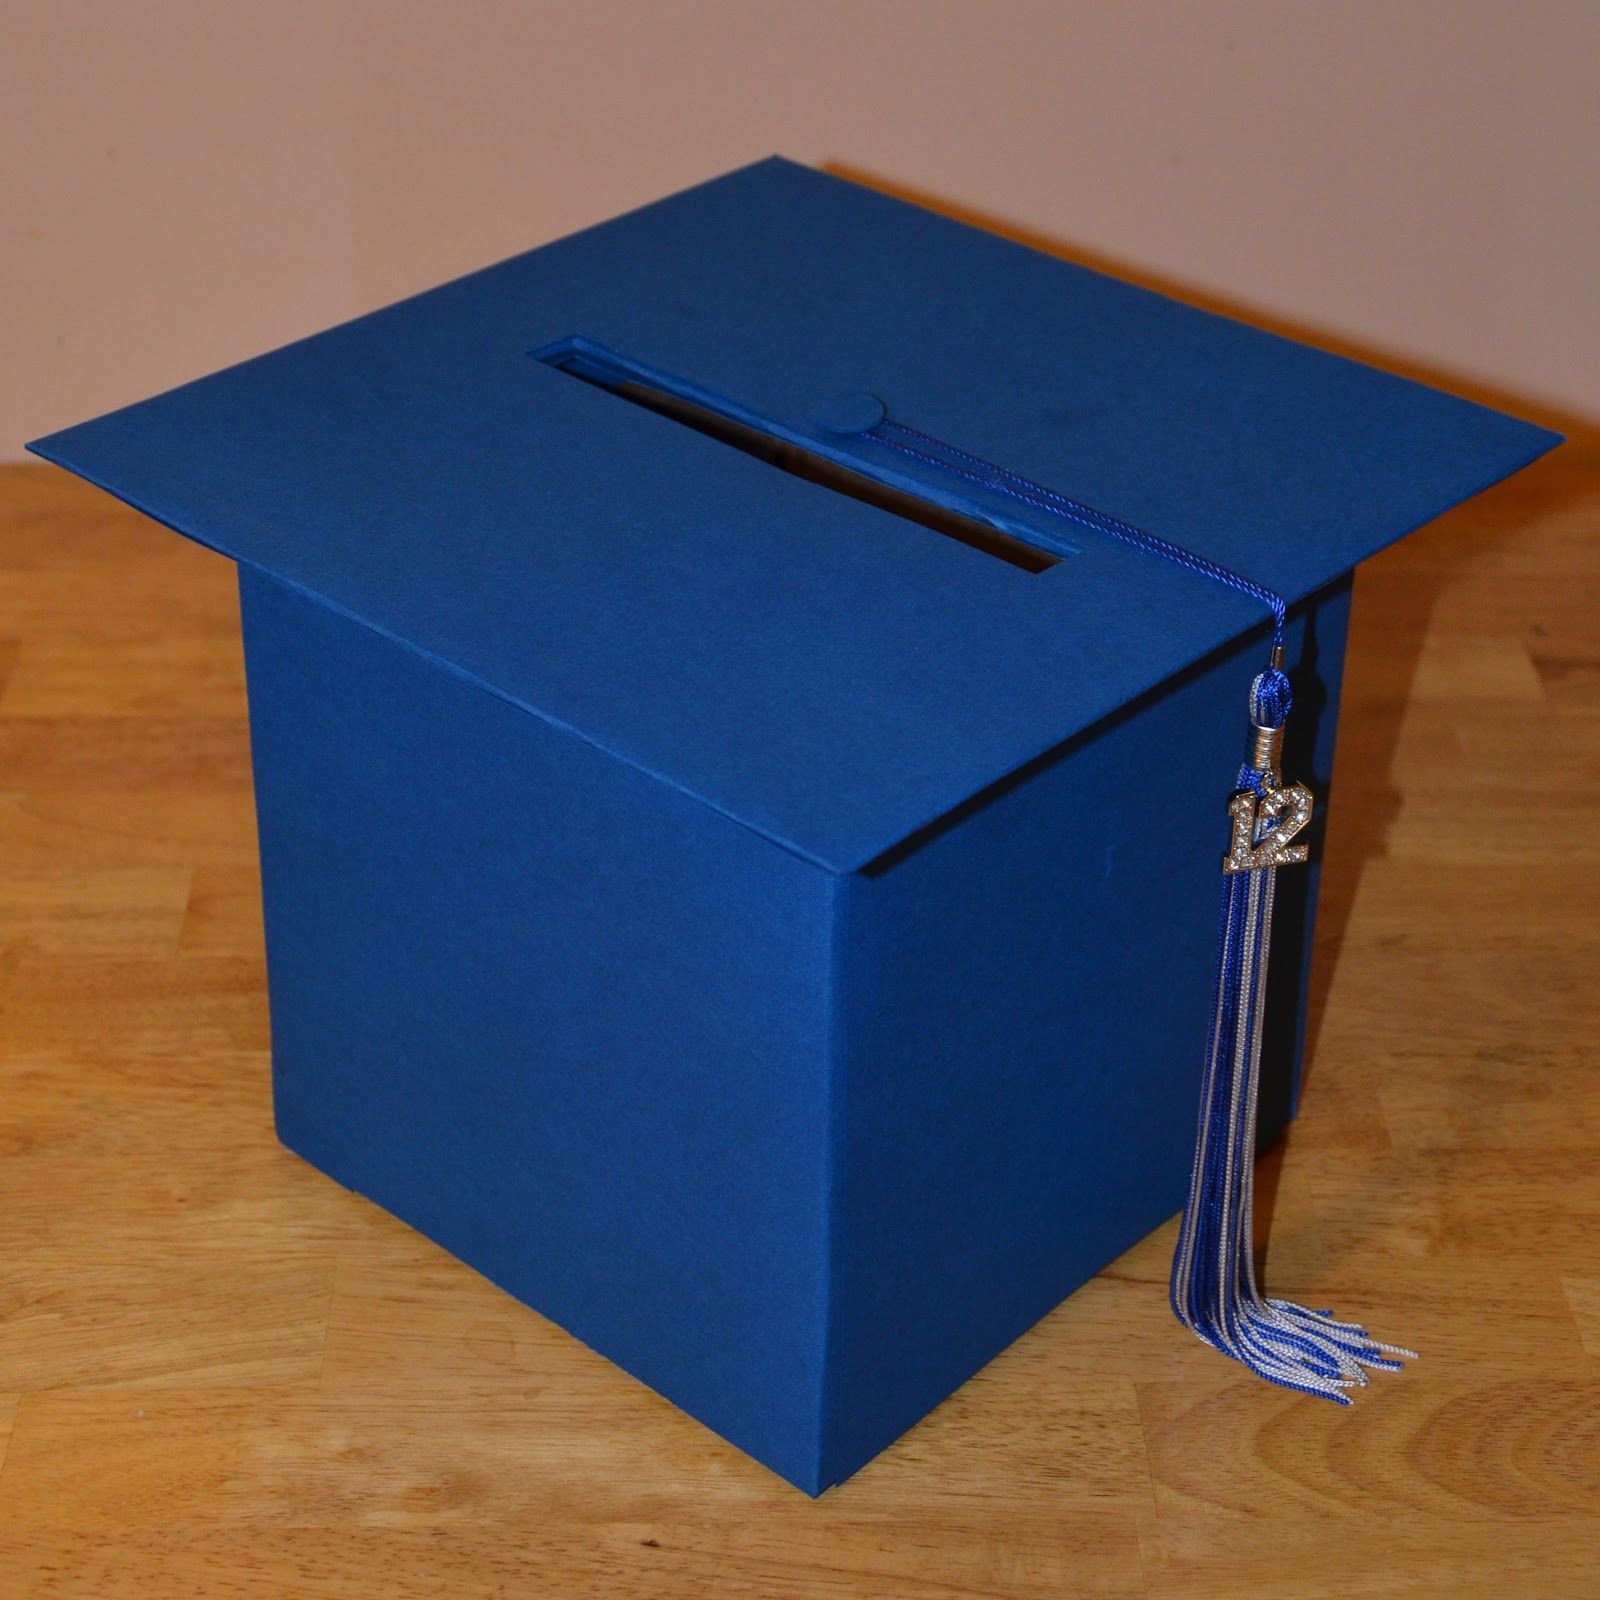 Best ideas about DIY Graduation Card Box
. Save or Pin Nancy s Craft Spot Graduation Card Box Now.